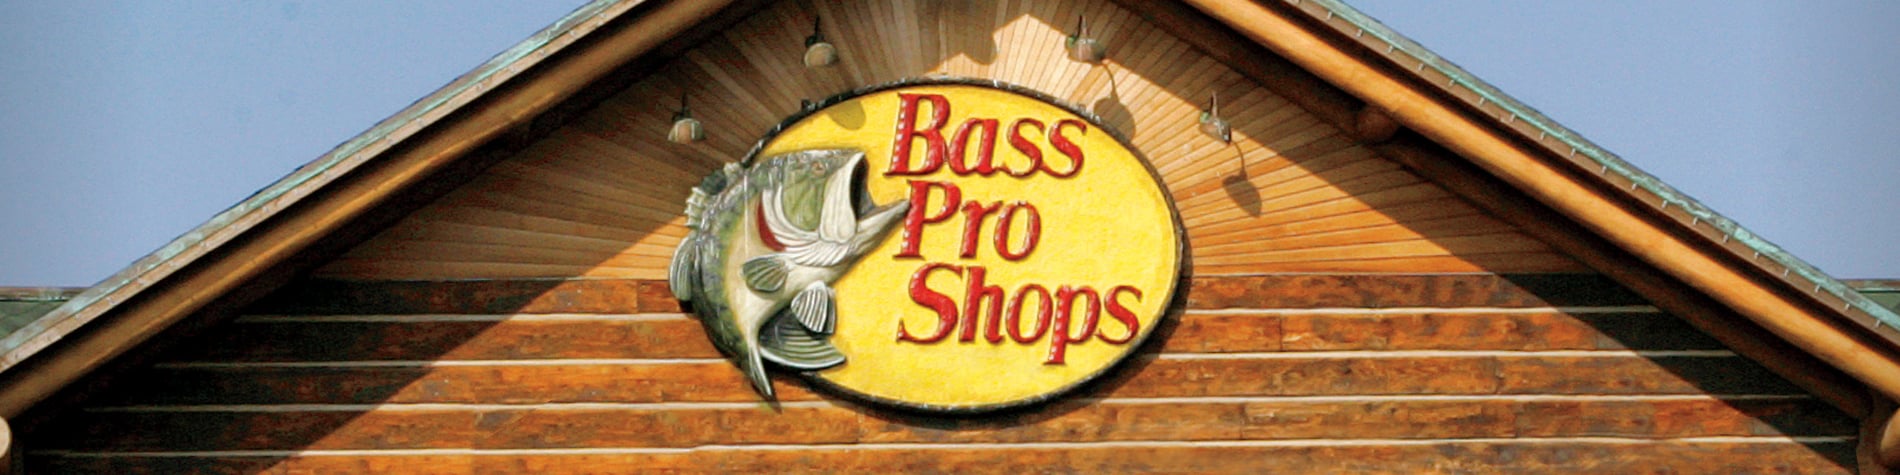 Bass Pro Shops storefront